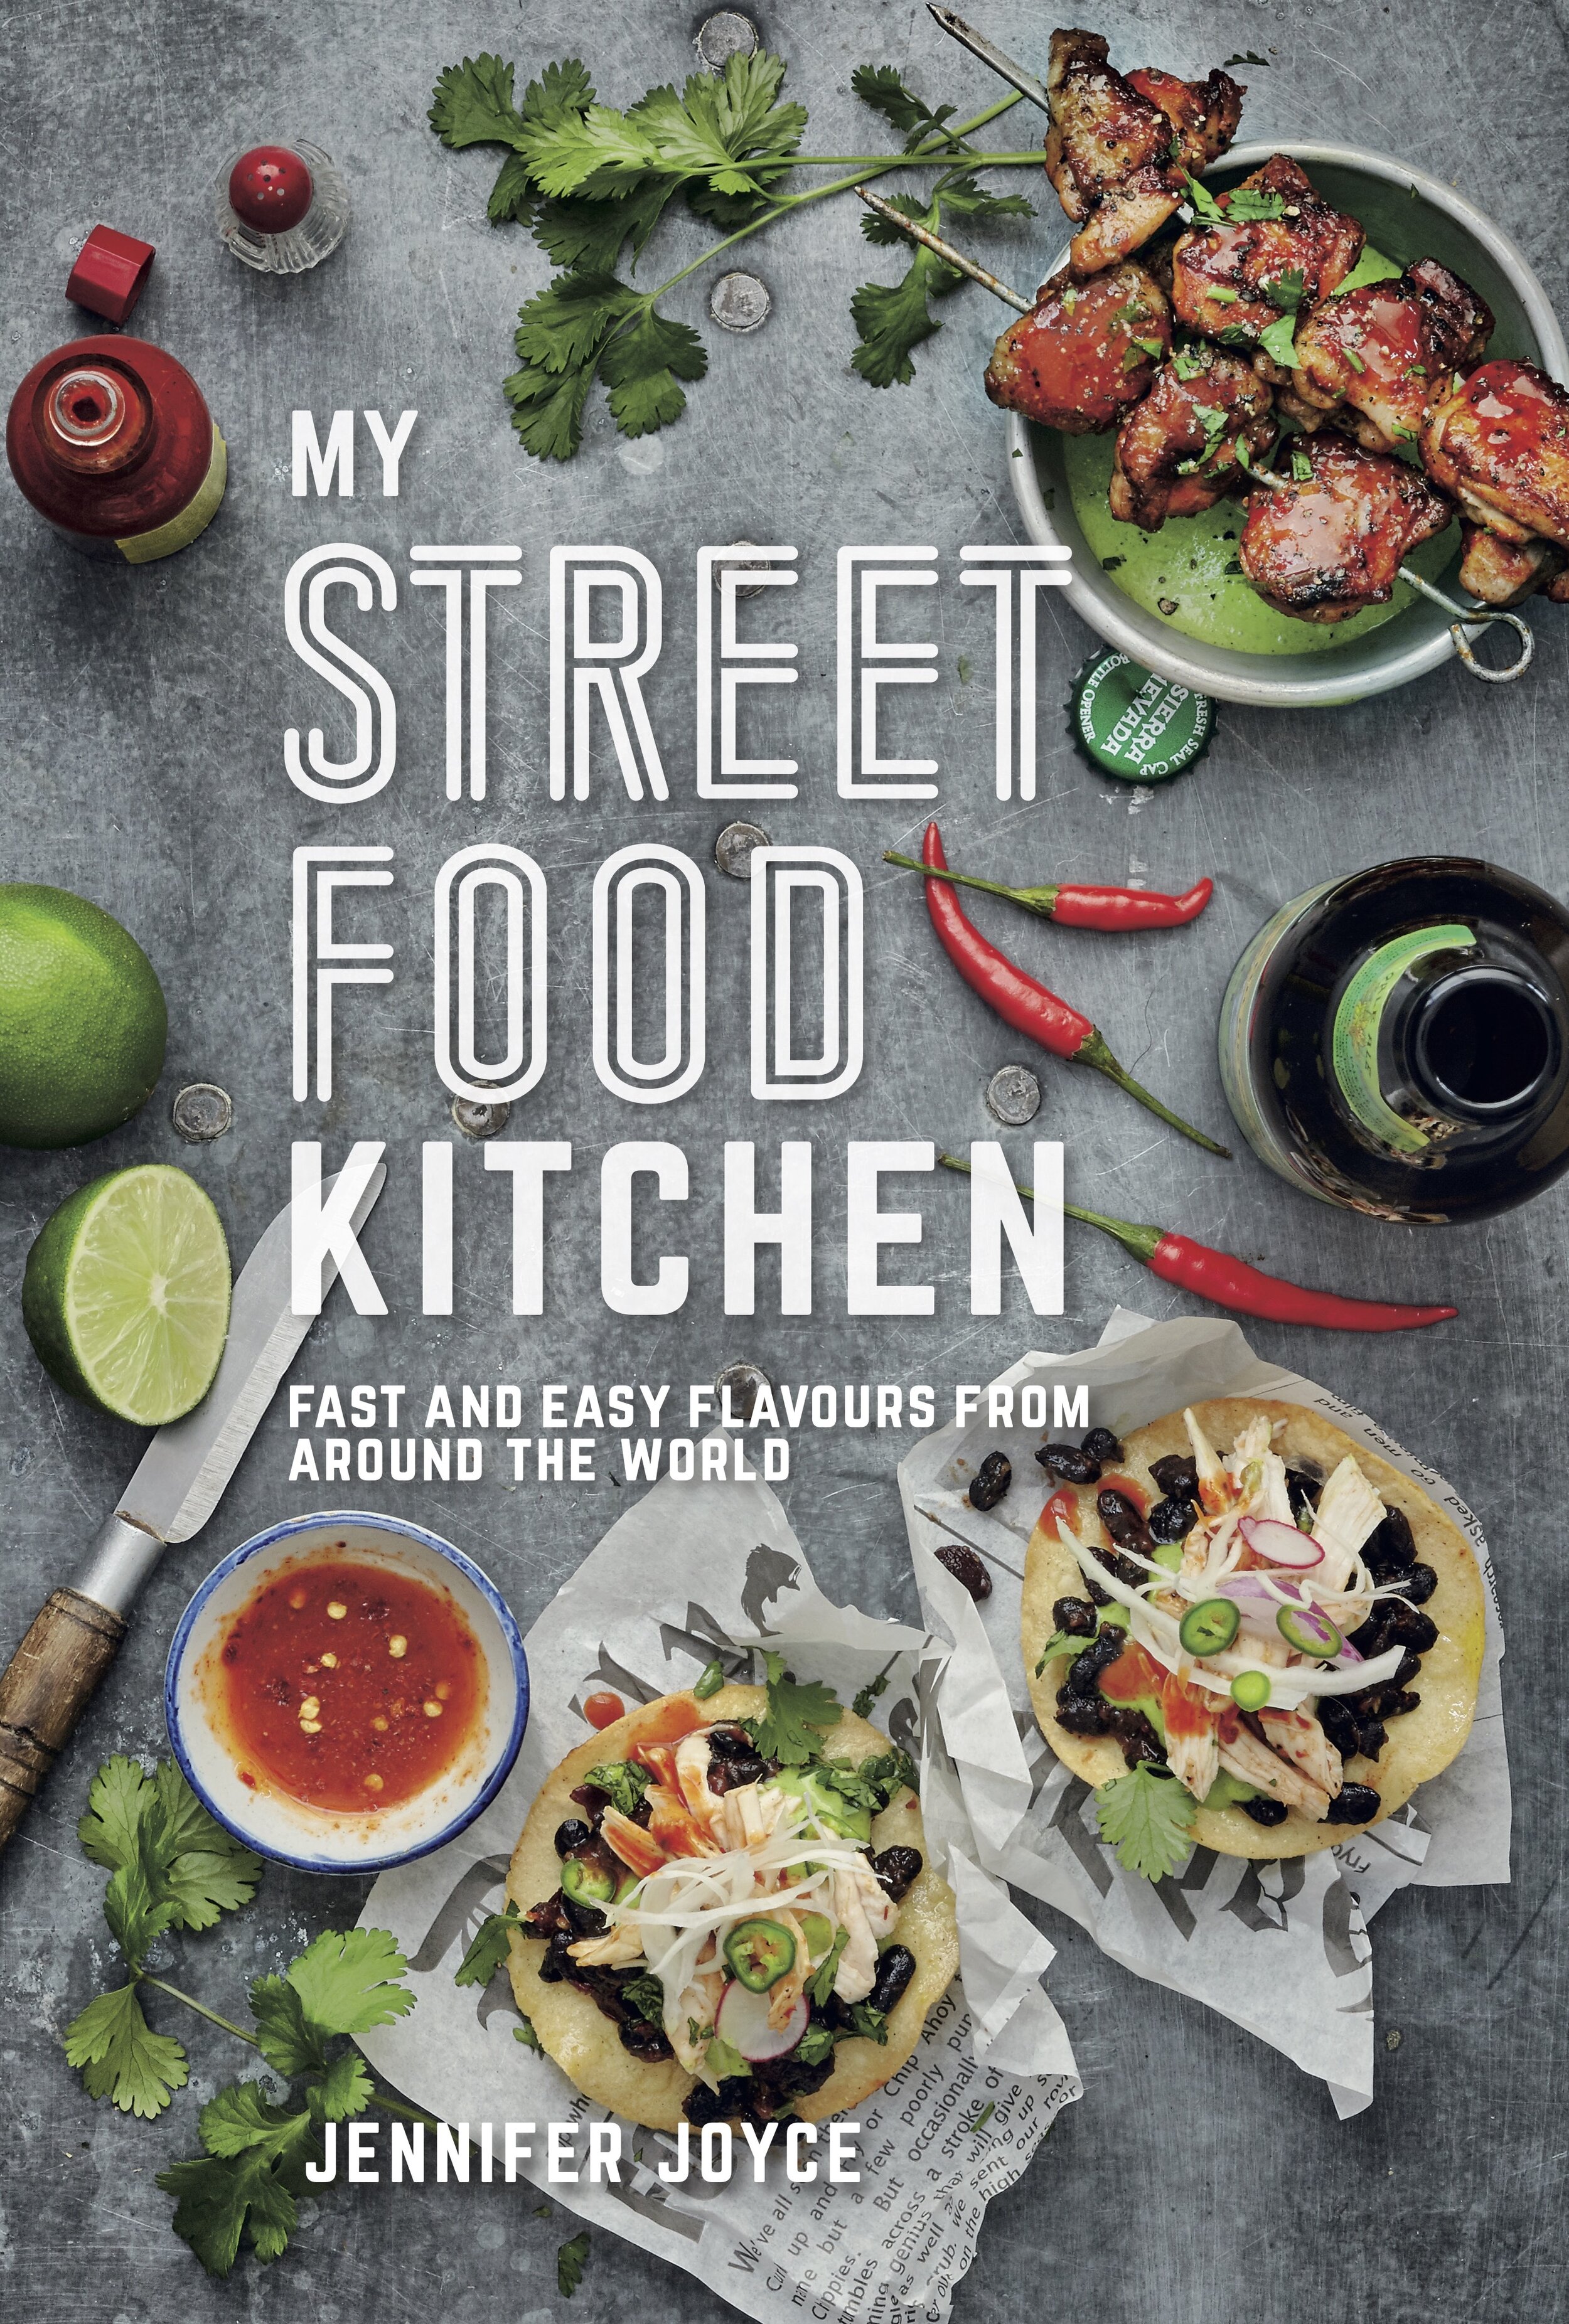 Murdoch - My Street Food Kitchen - cover.jpg